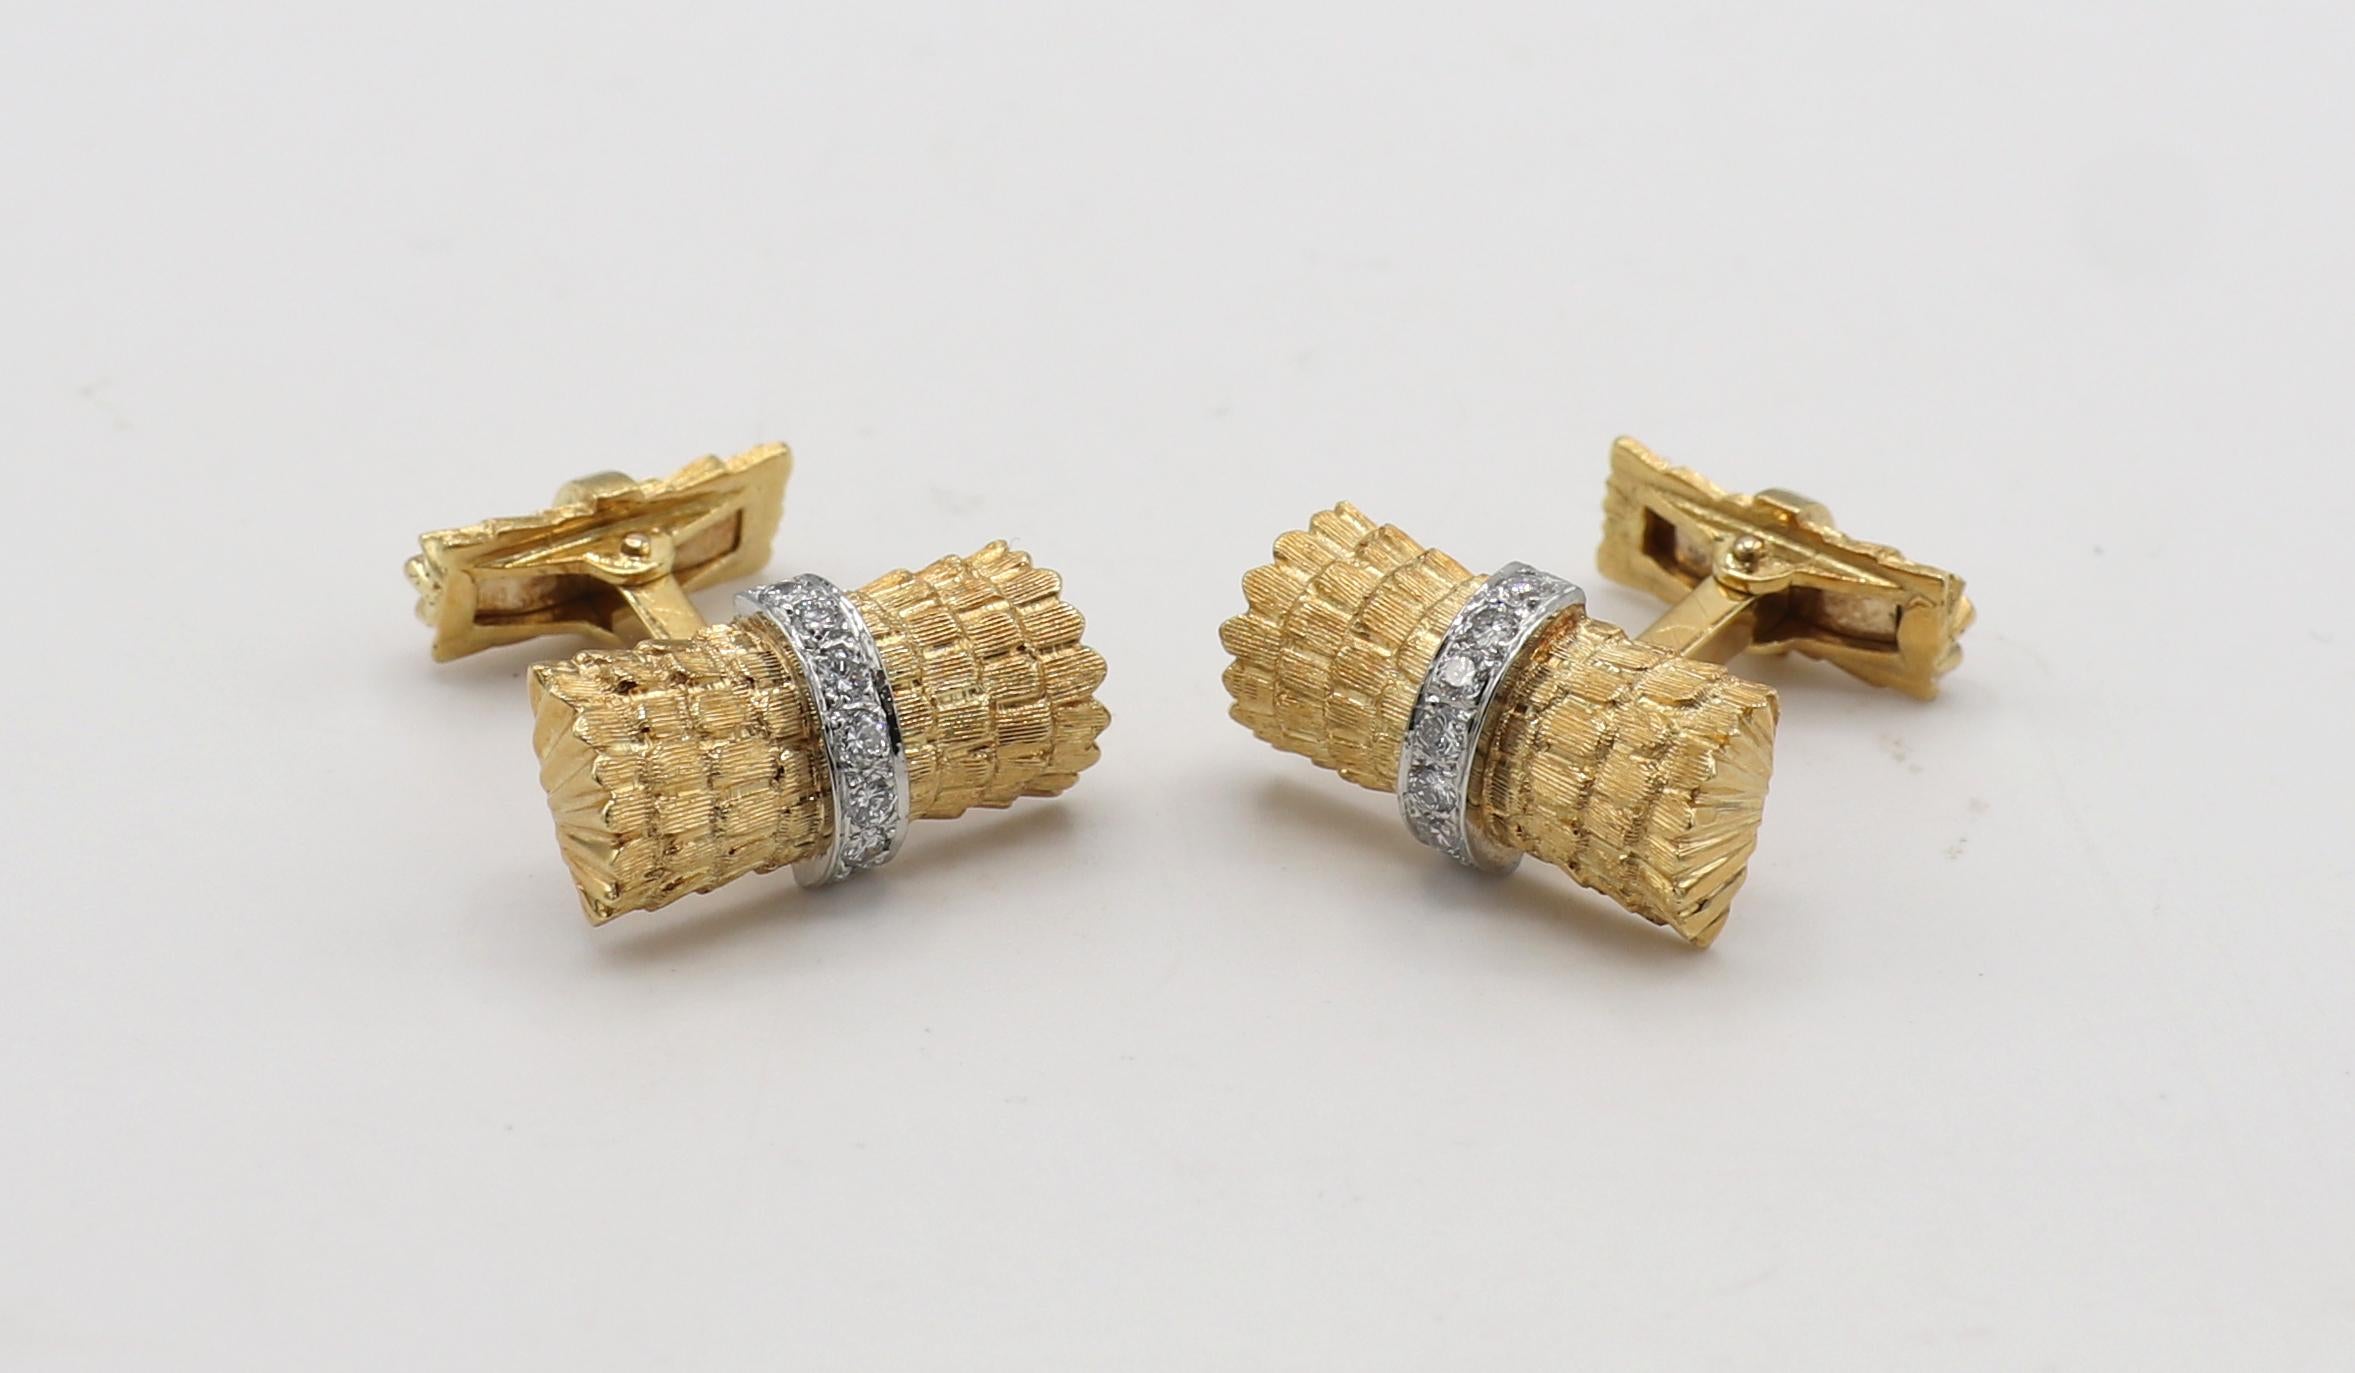 Tiffany & Co. 18 Karat Gold & Diamond Cufflinks 
Metal: 18k yellow gold
Weight: 16.89 grams
Diamonds: Approx. .42 CTW G-H VS round diamonds
Length: 20mm
Width: 10.3mm
